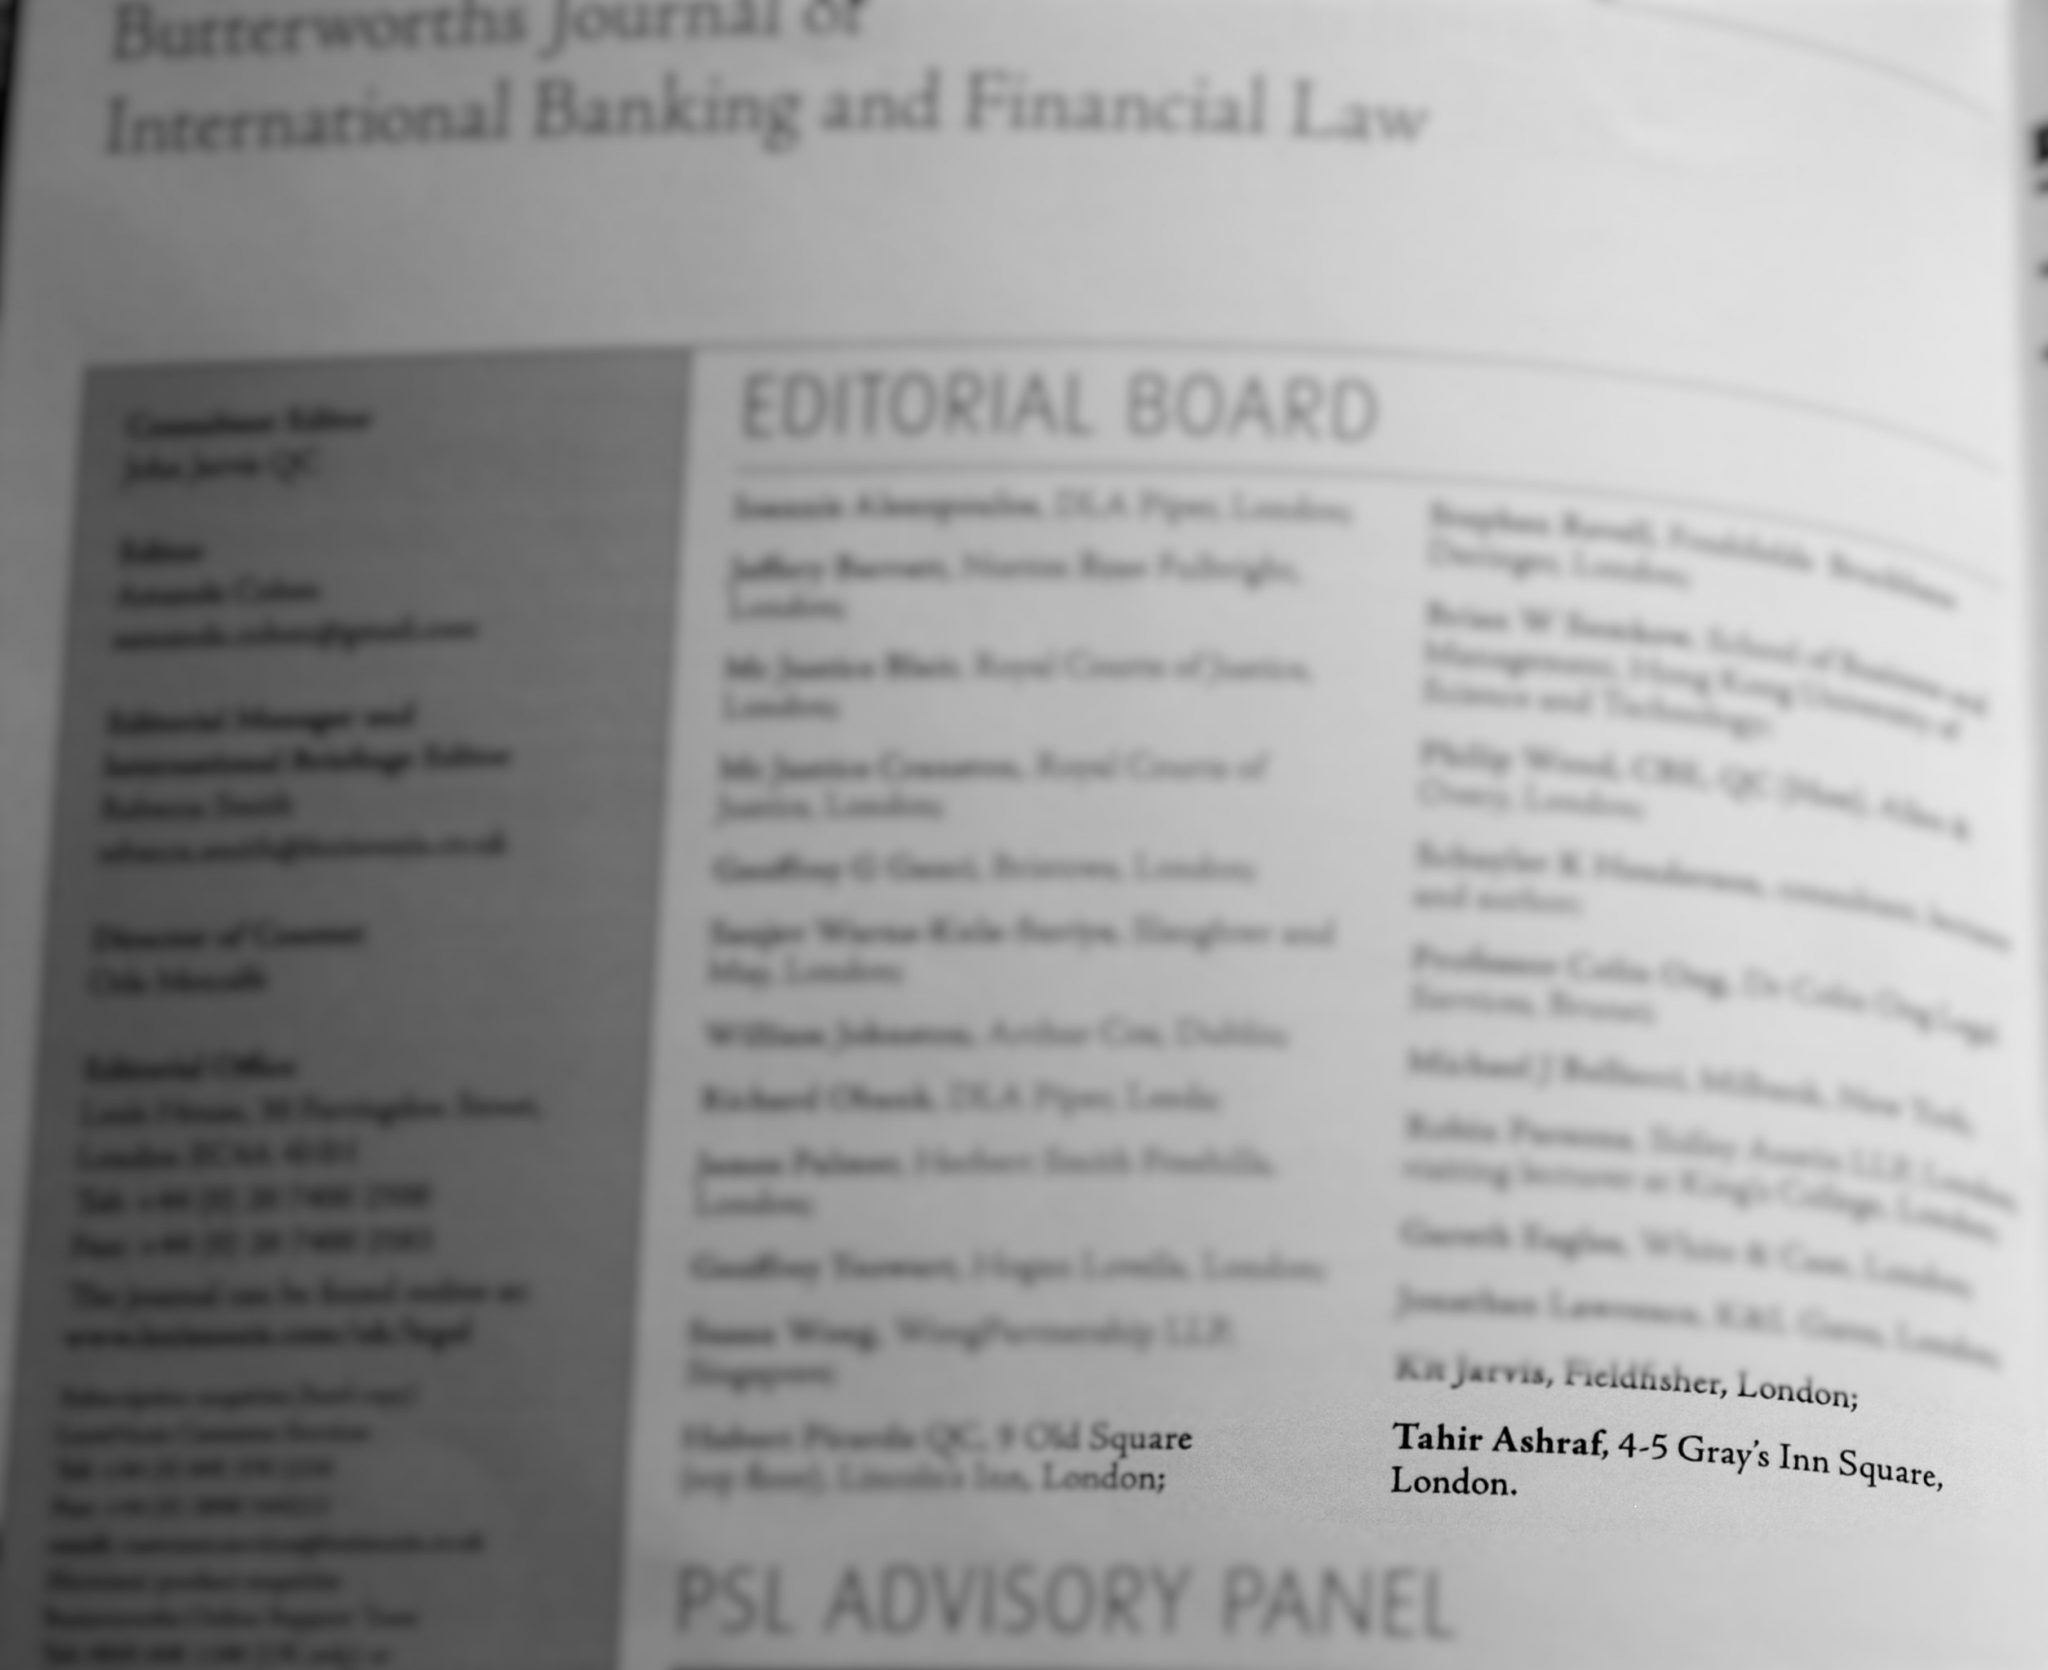 The international banking standards board